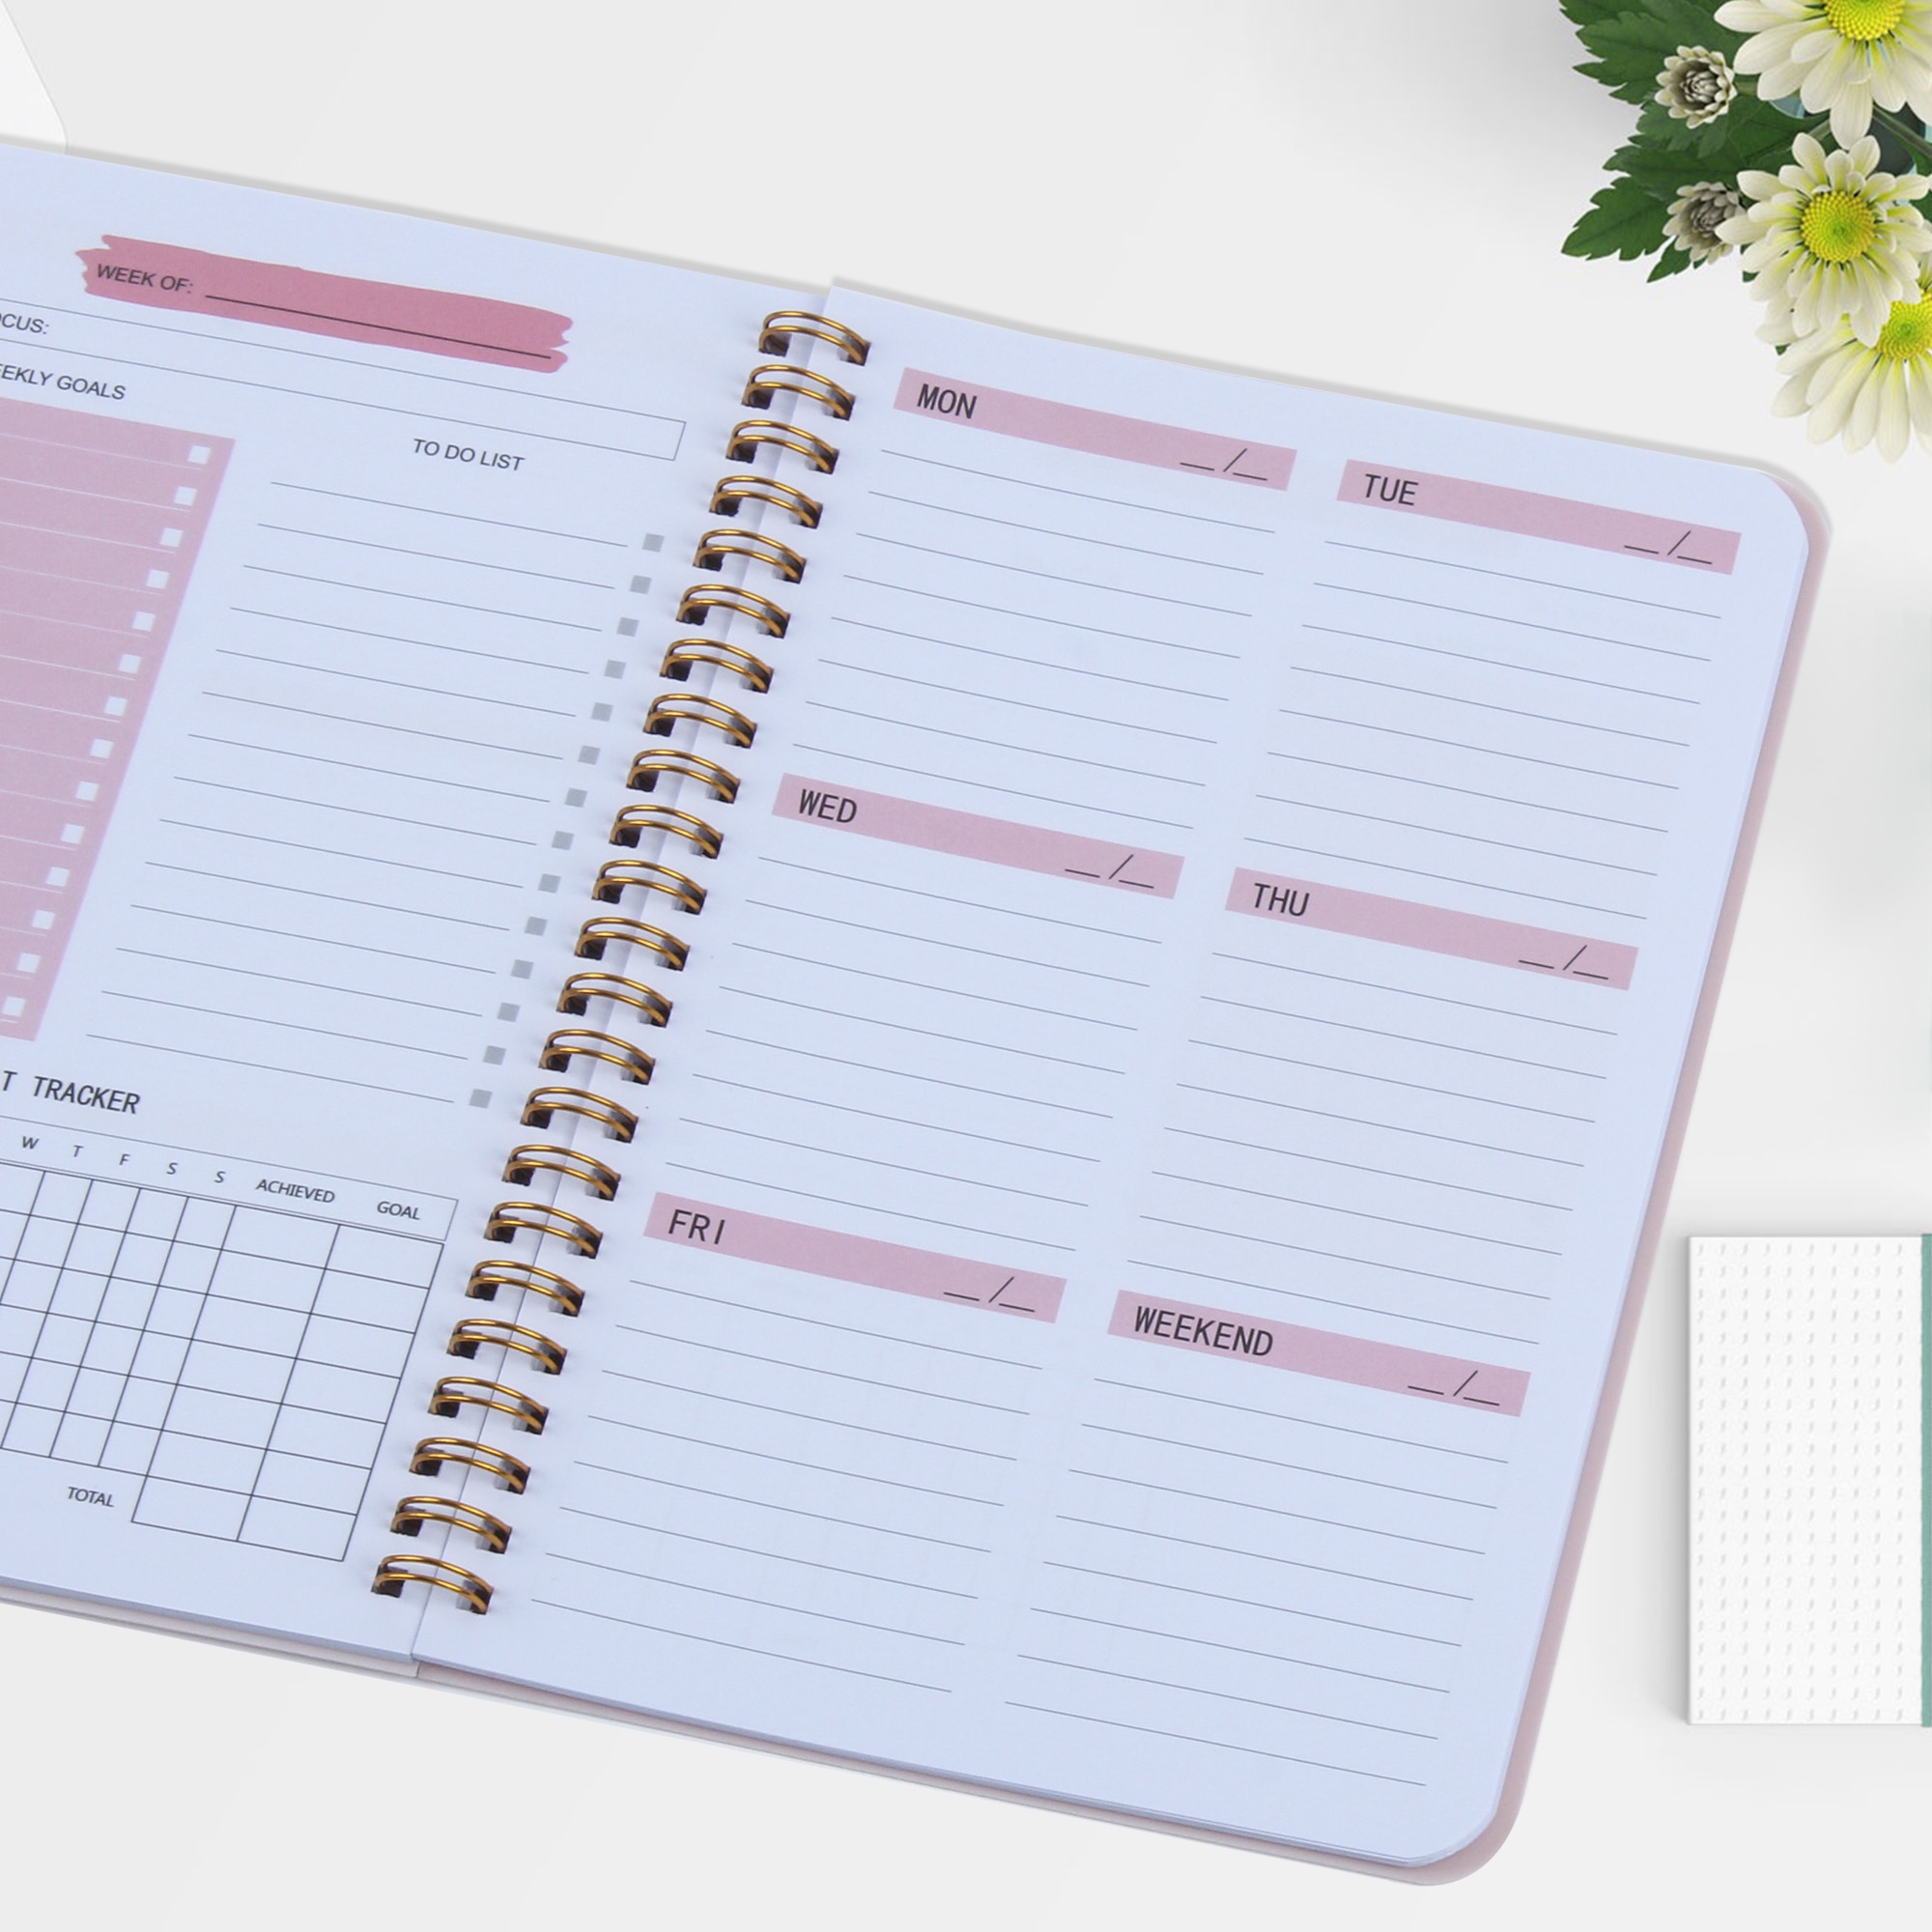 2022 Daily Weekly Planner A5 Notebook Weekly Goals Office Agenda Habit Schedule